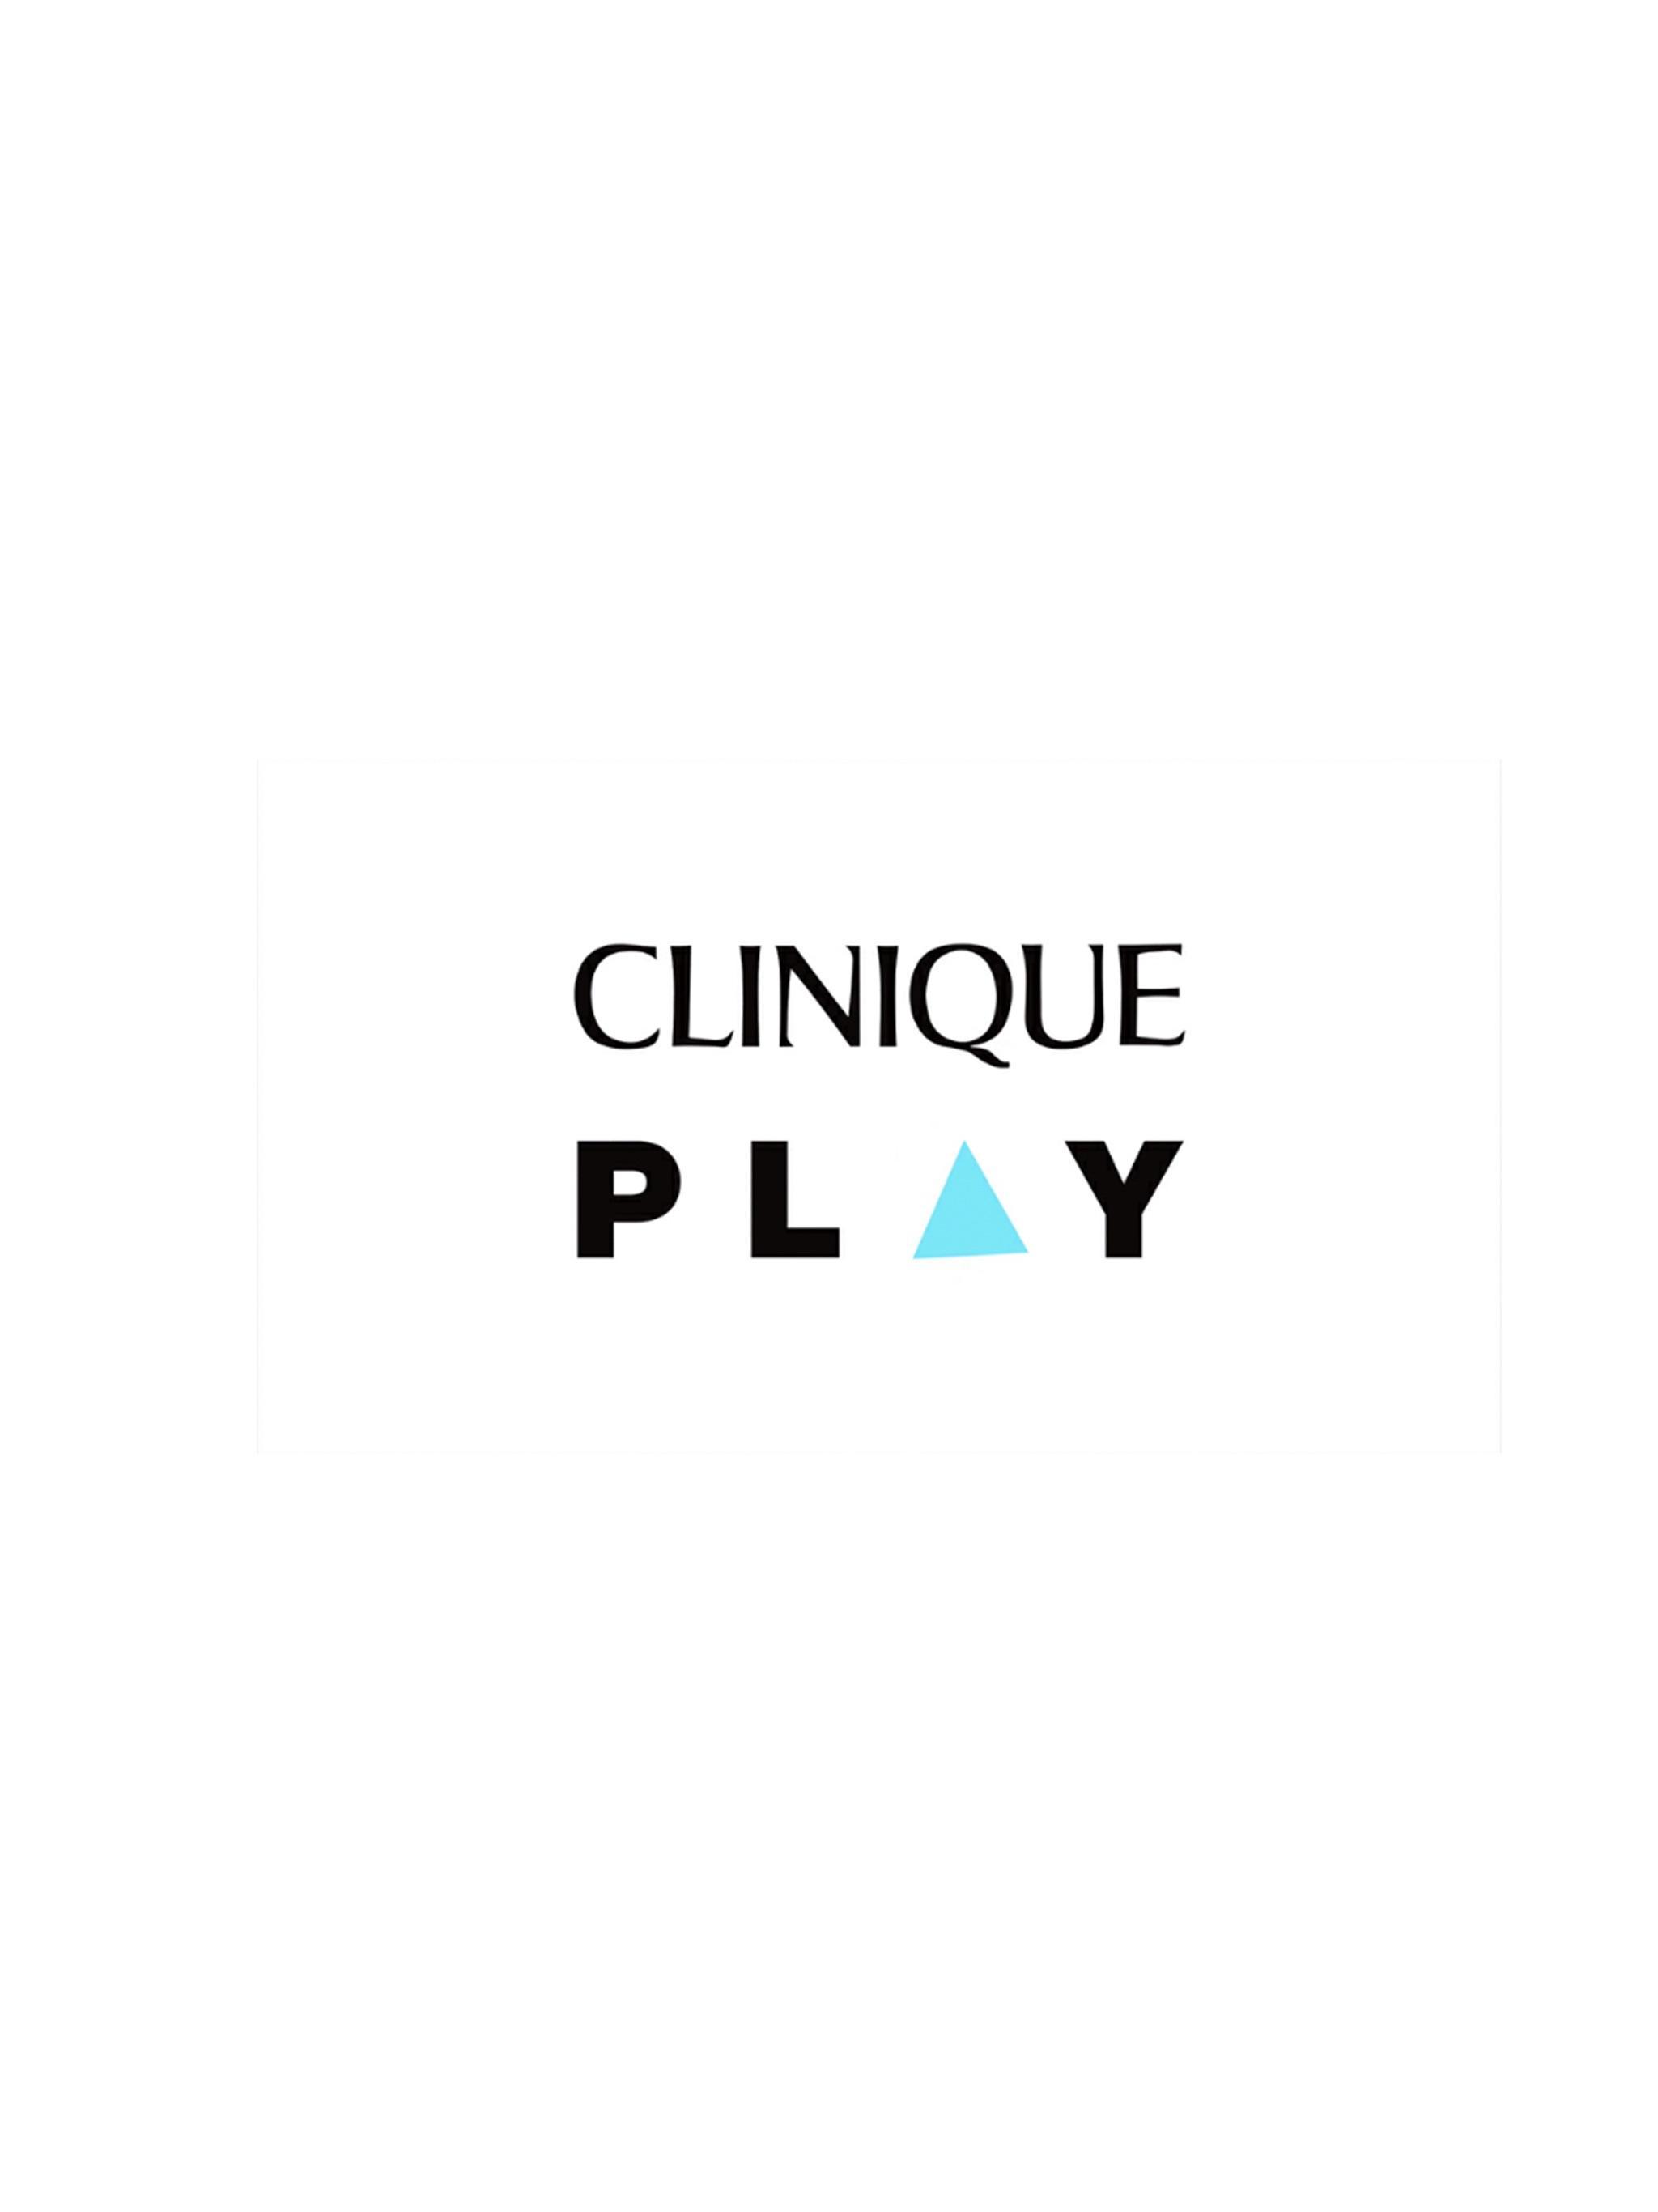 CliniquePlay 1.2 Screenshot 7